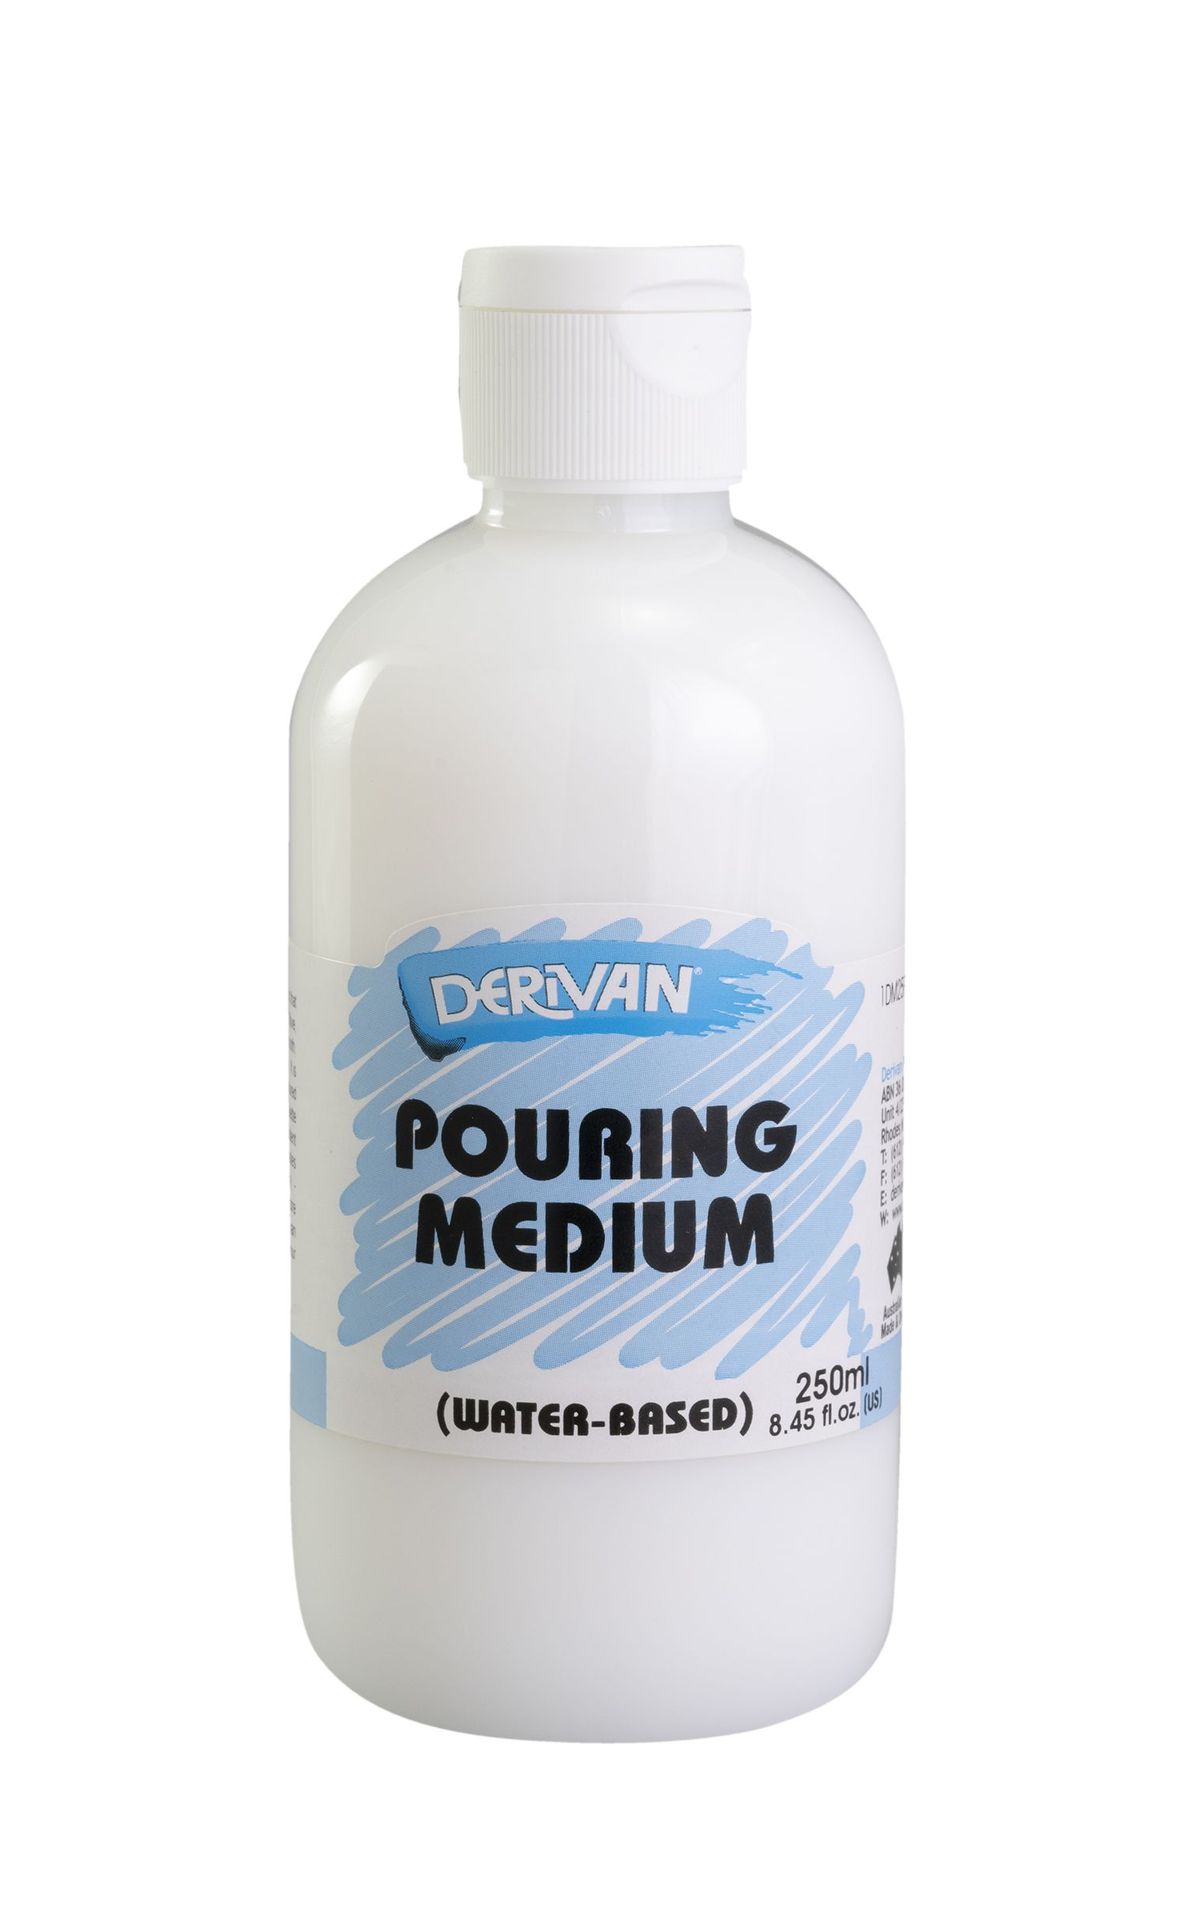 Derivan Pouring Medium Product image